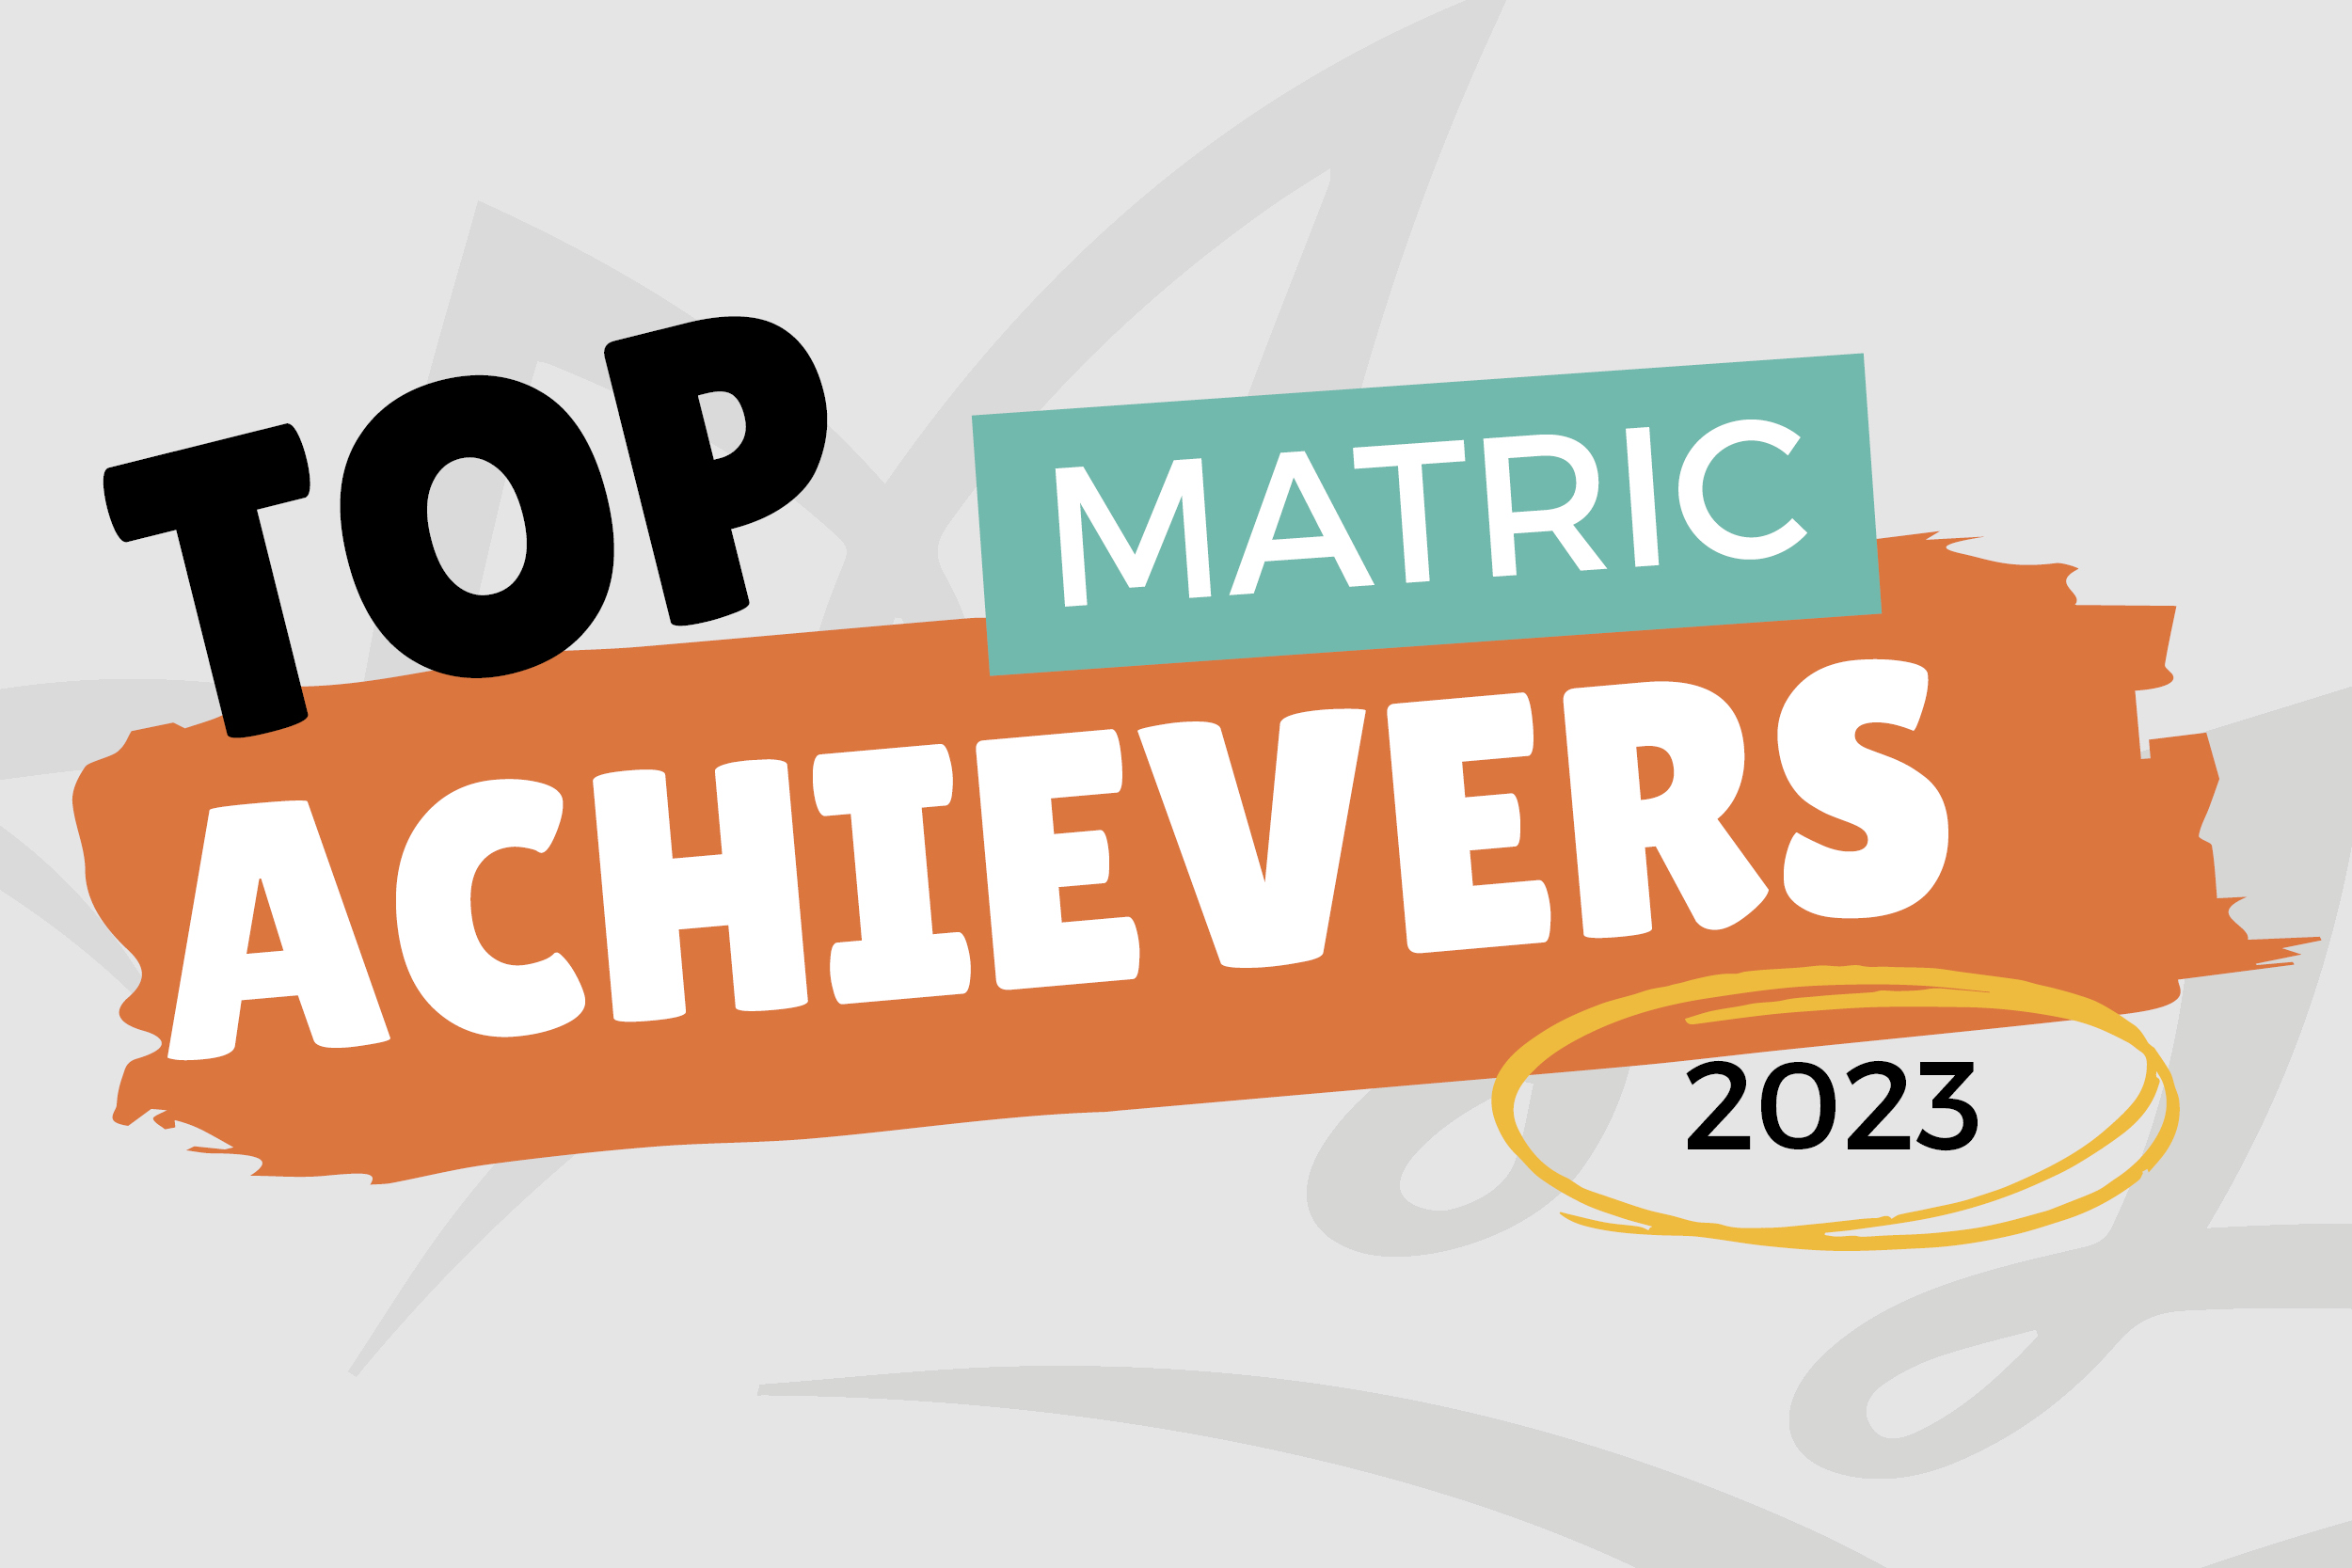 Top Matric Achievers 2023